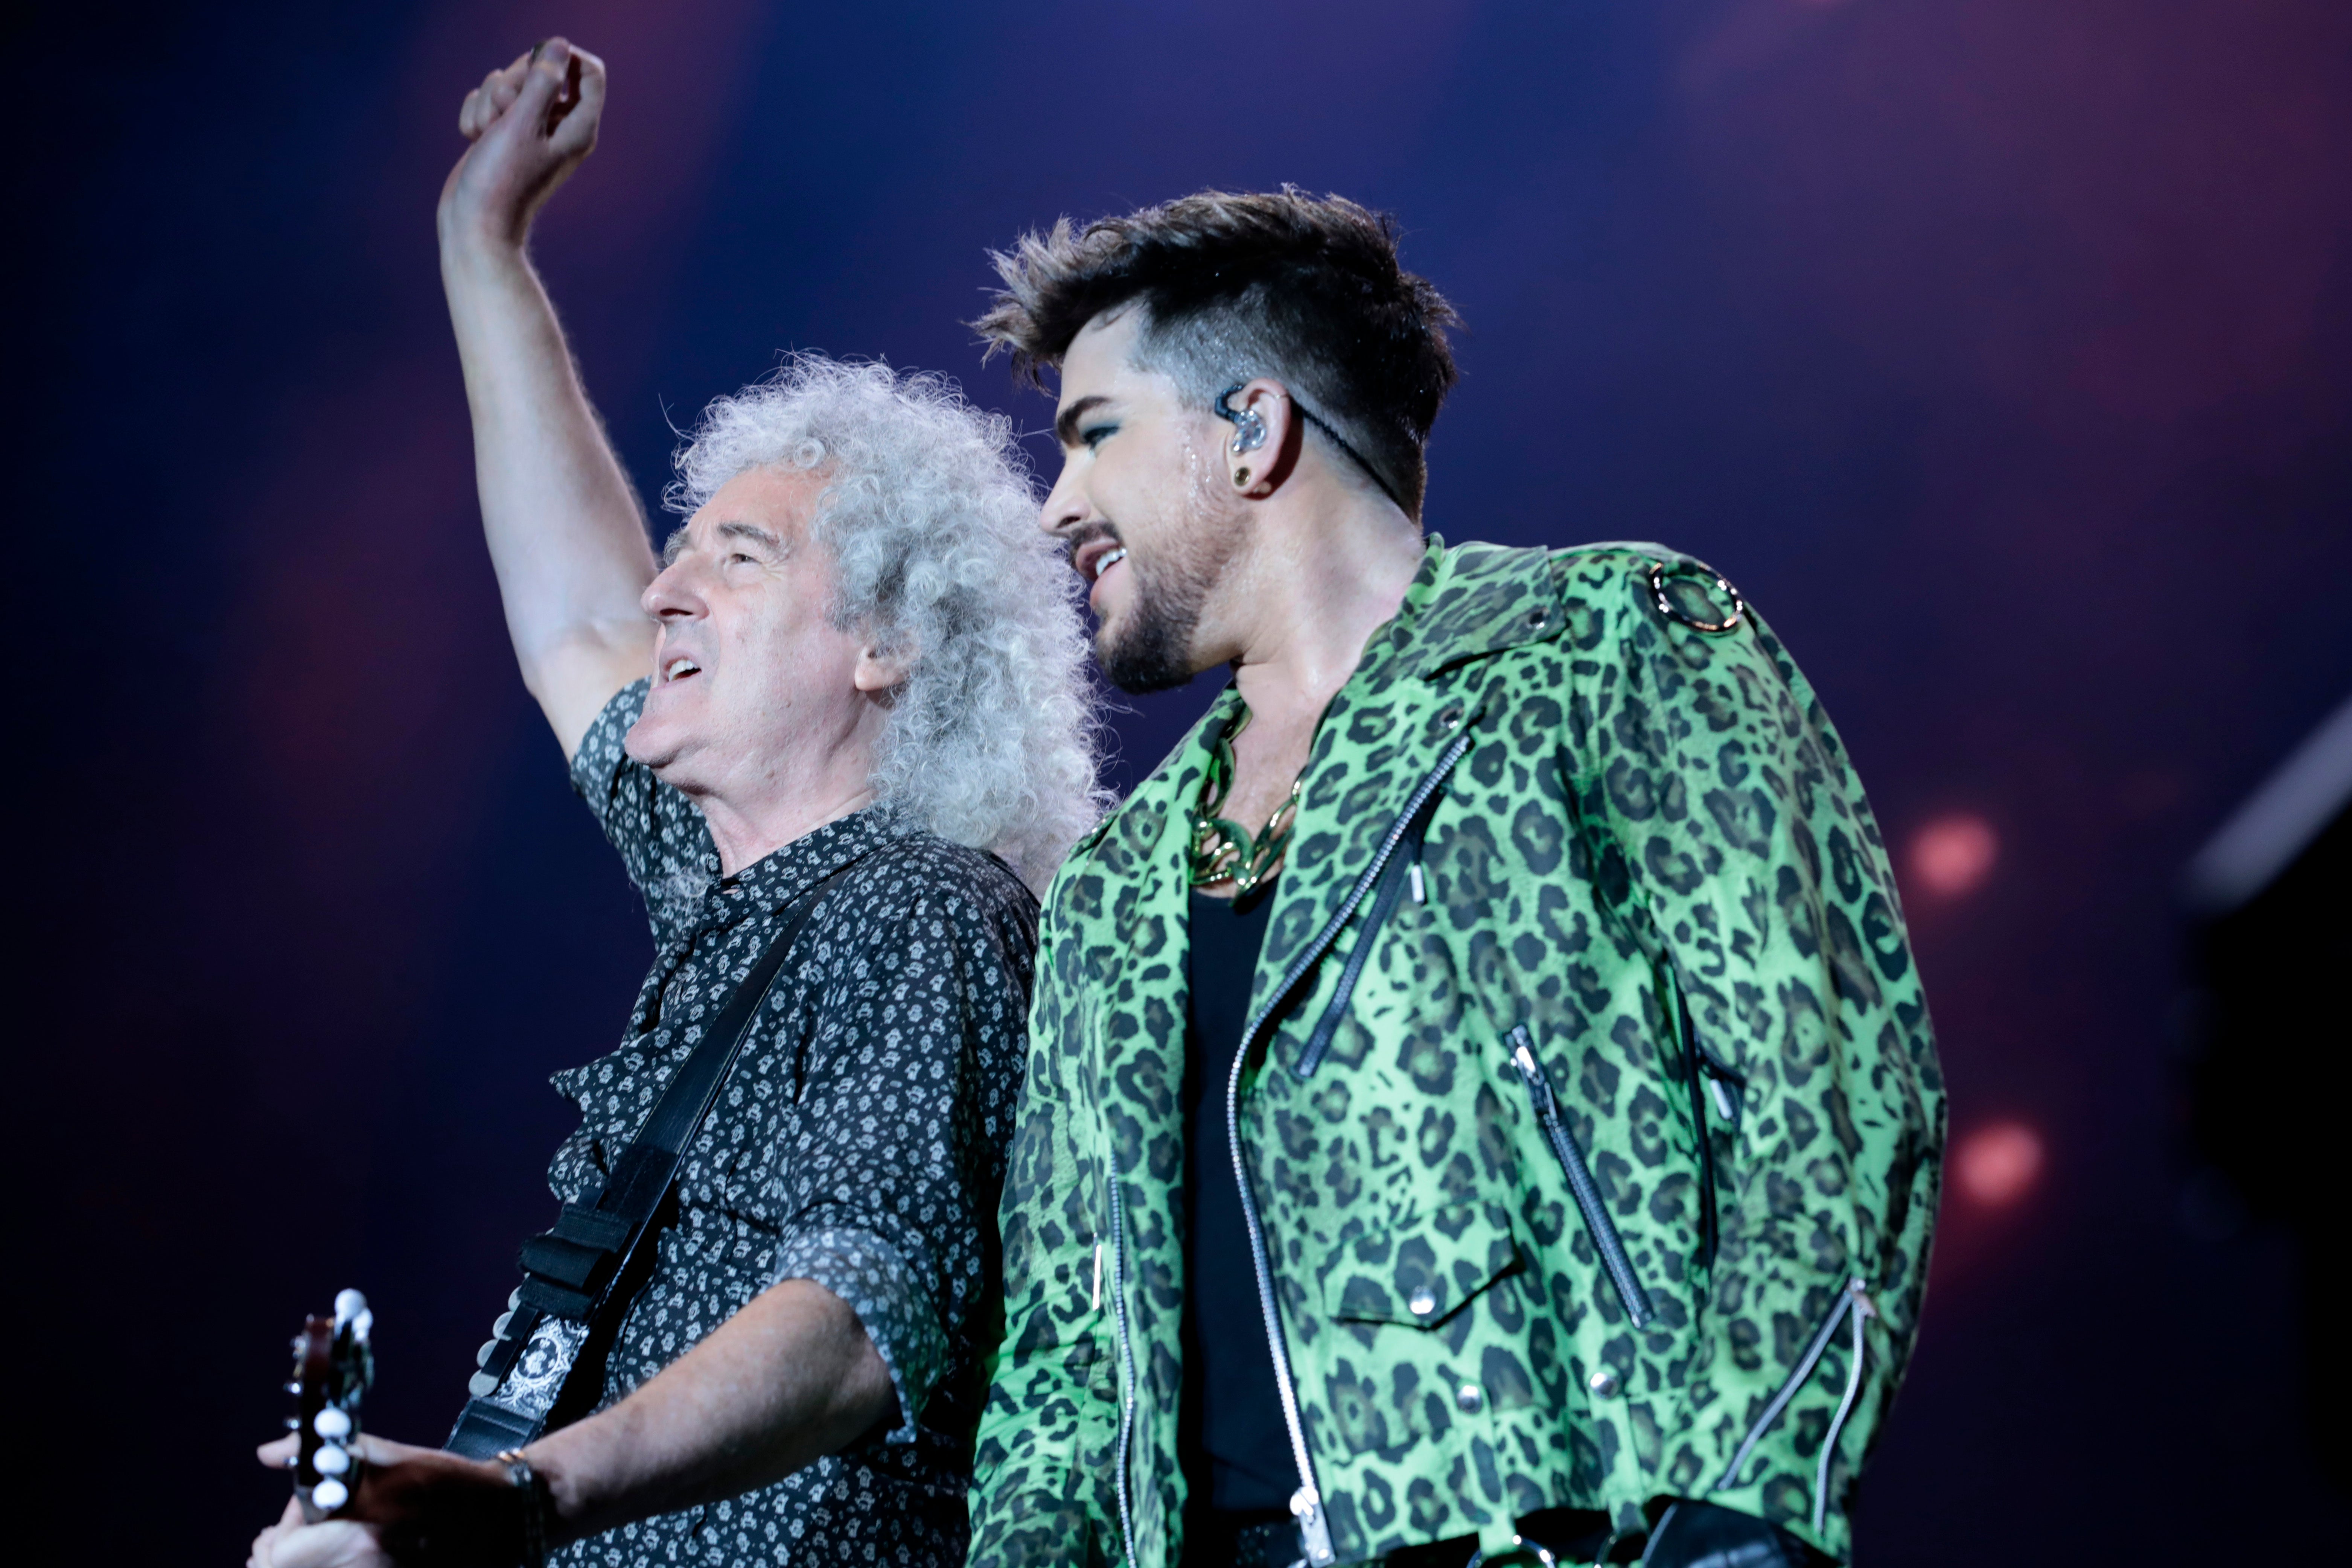 Adam Lambert on stage with Queen